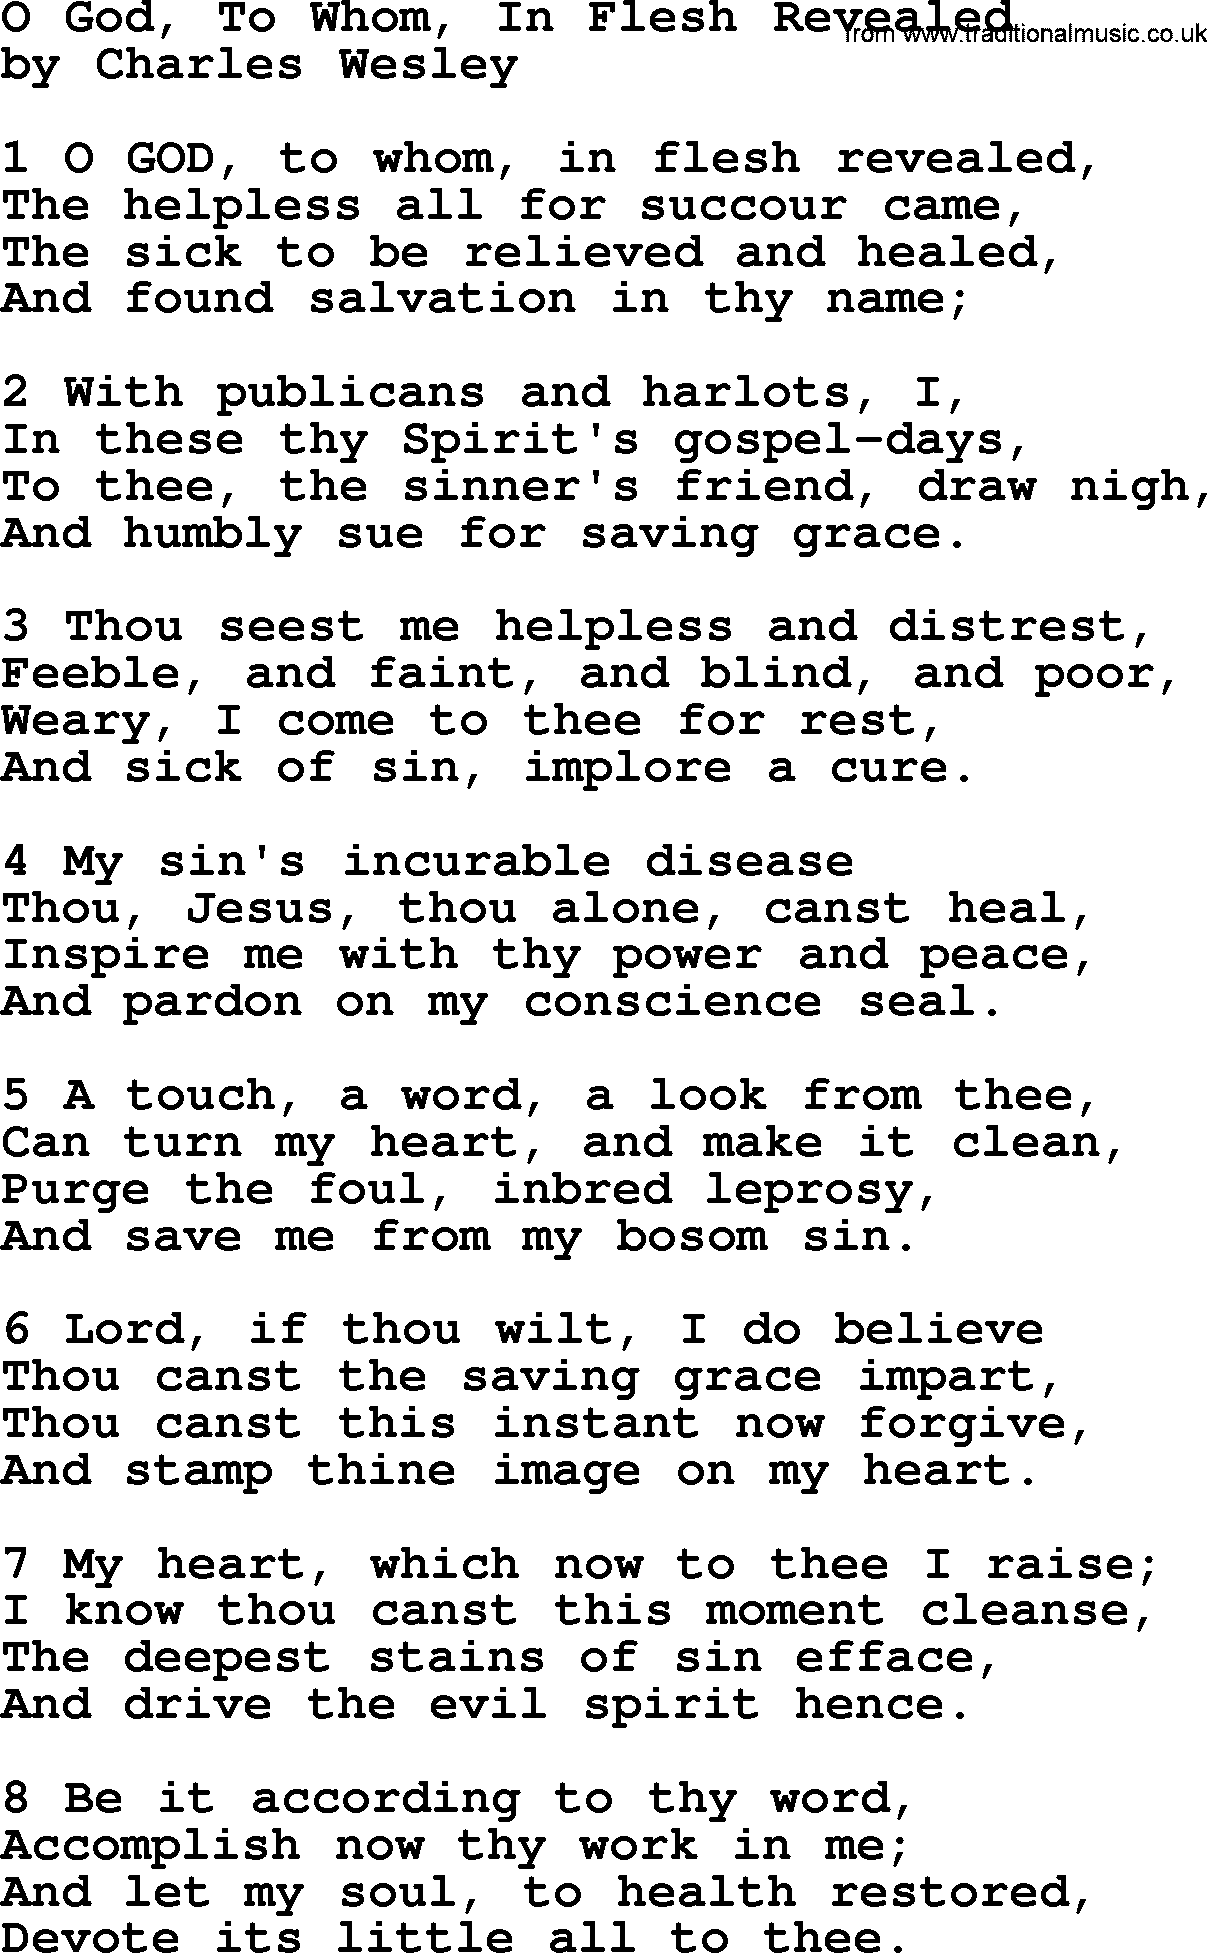 Charles Wesley hymn: O God, To Whom, In Flesh Revealed, lyrics